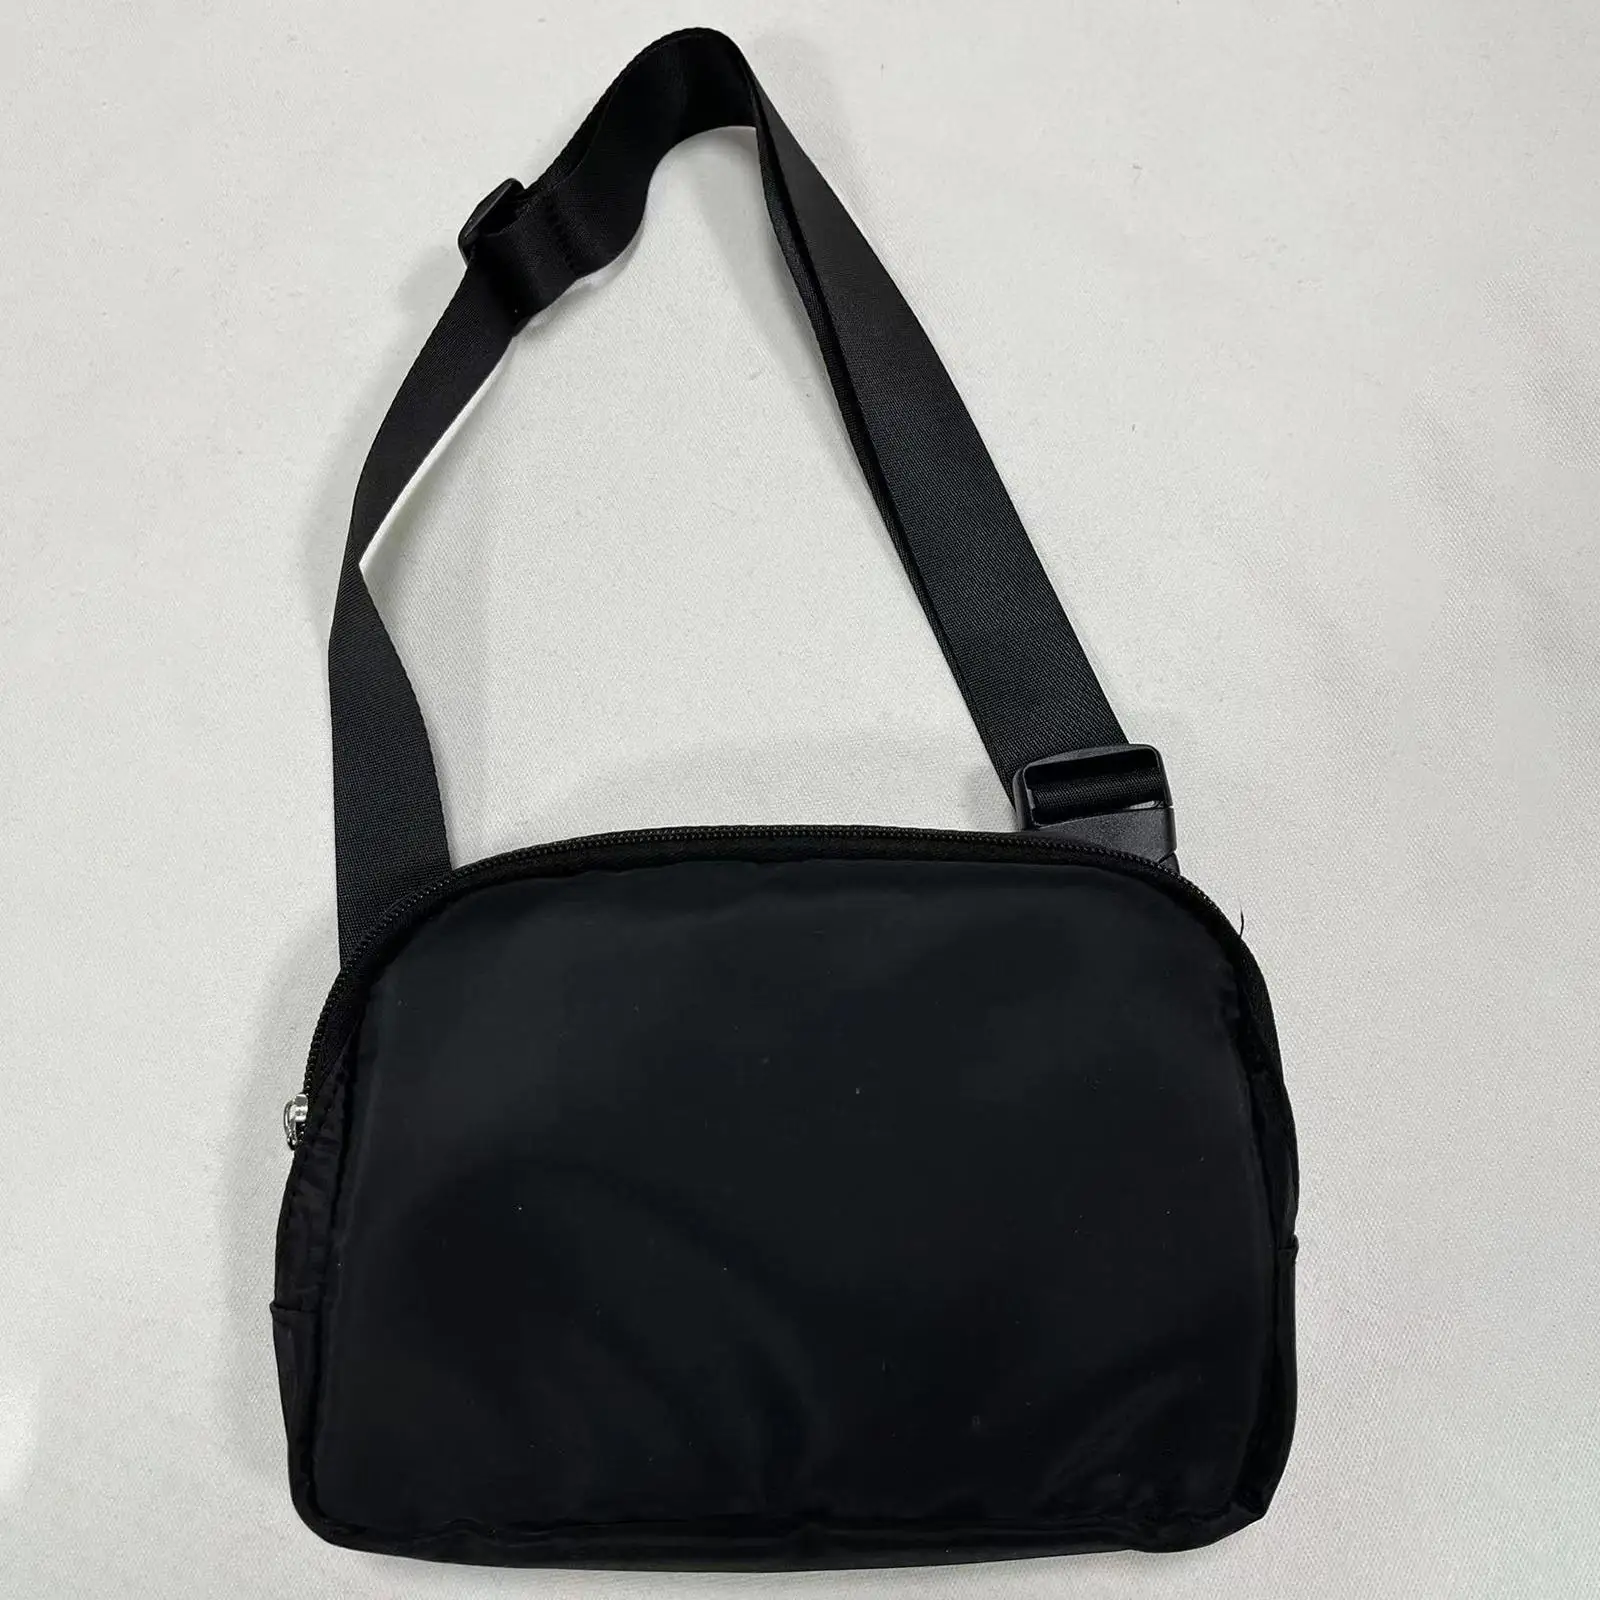 Waist Bag Chest Bag Adjustable Strap Belt Bag Tote Fanny Pack Phone Key Holder for Walking Camping Leisure Flashlight Sports